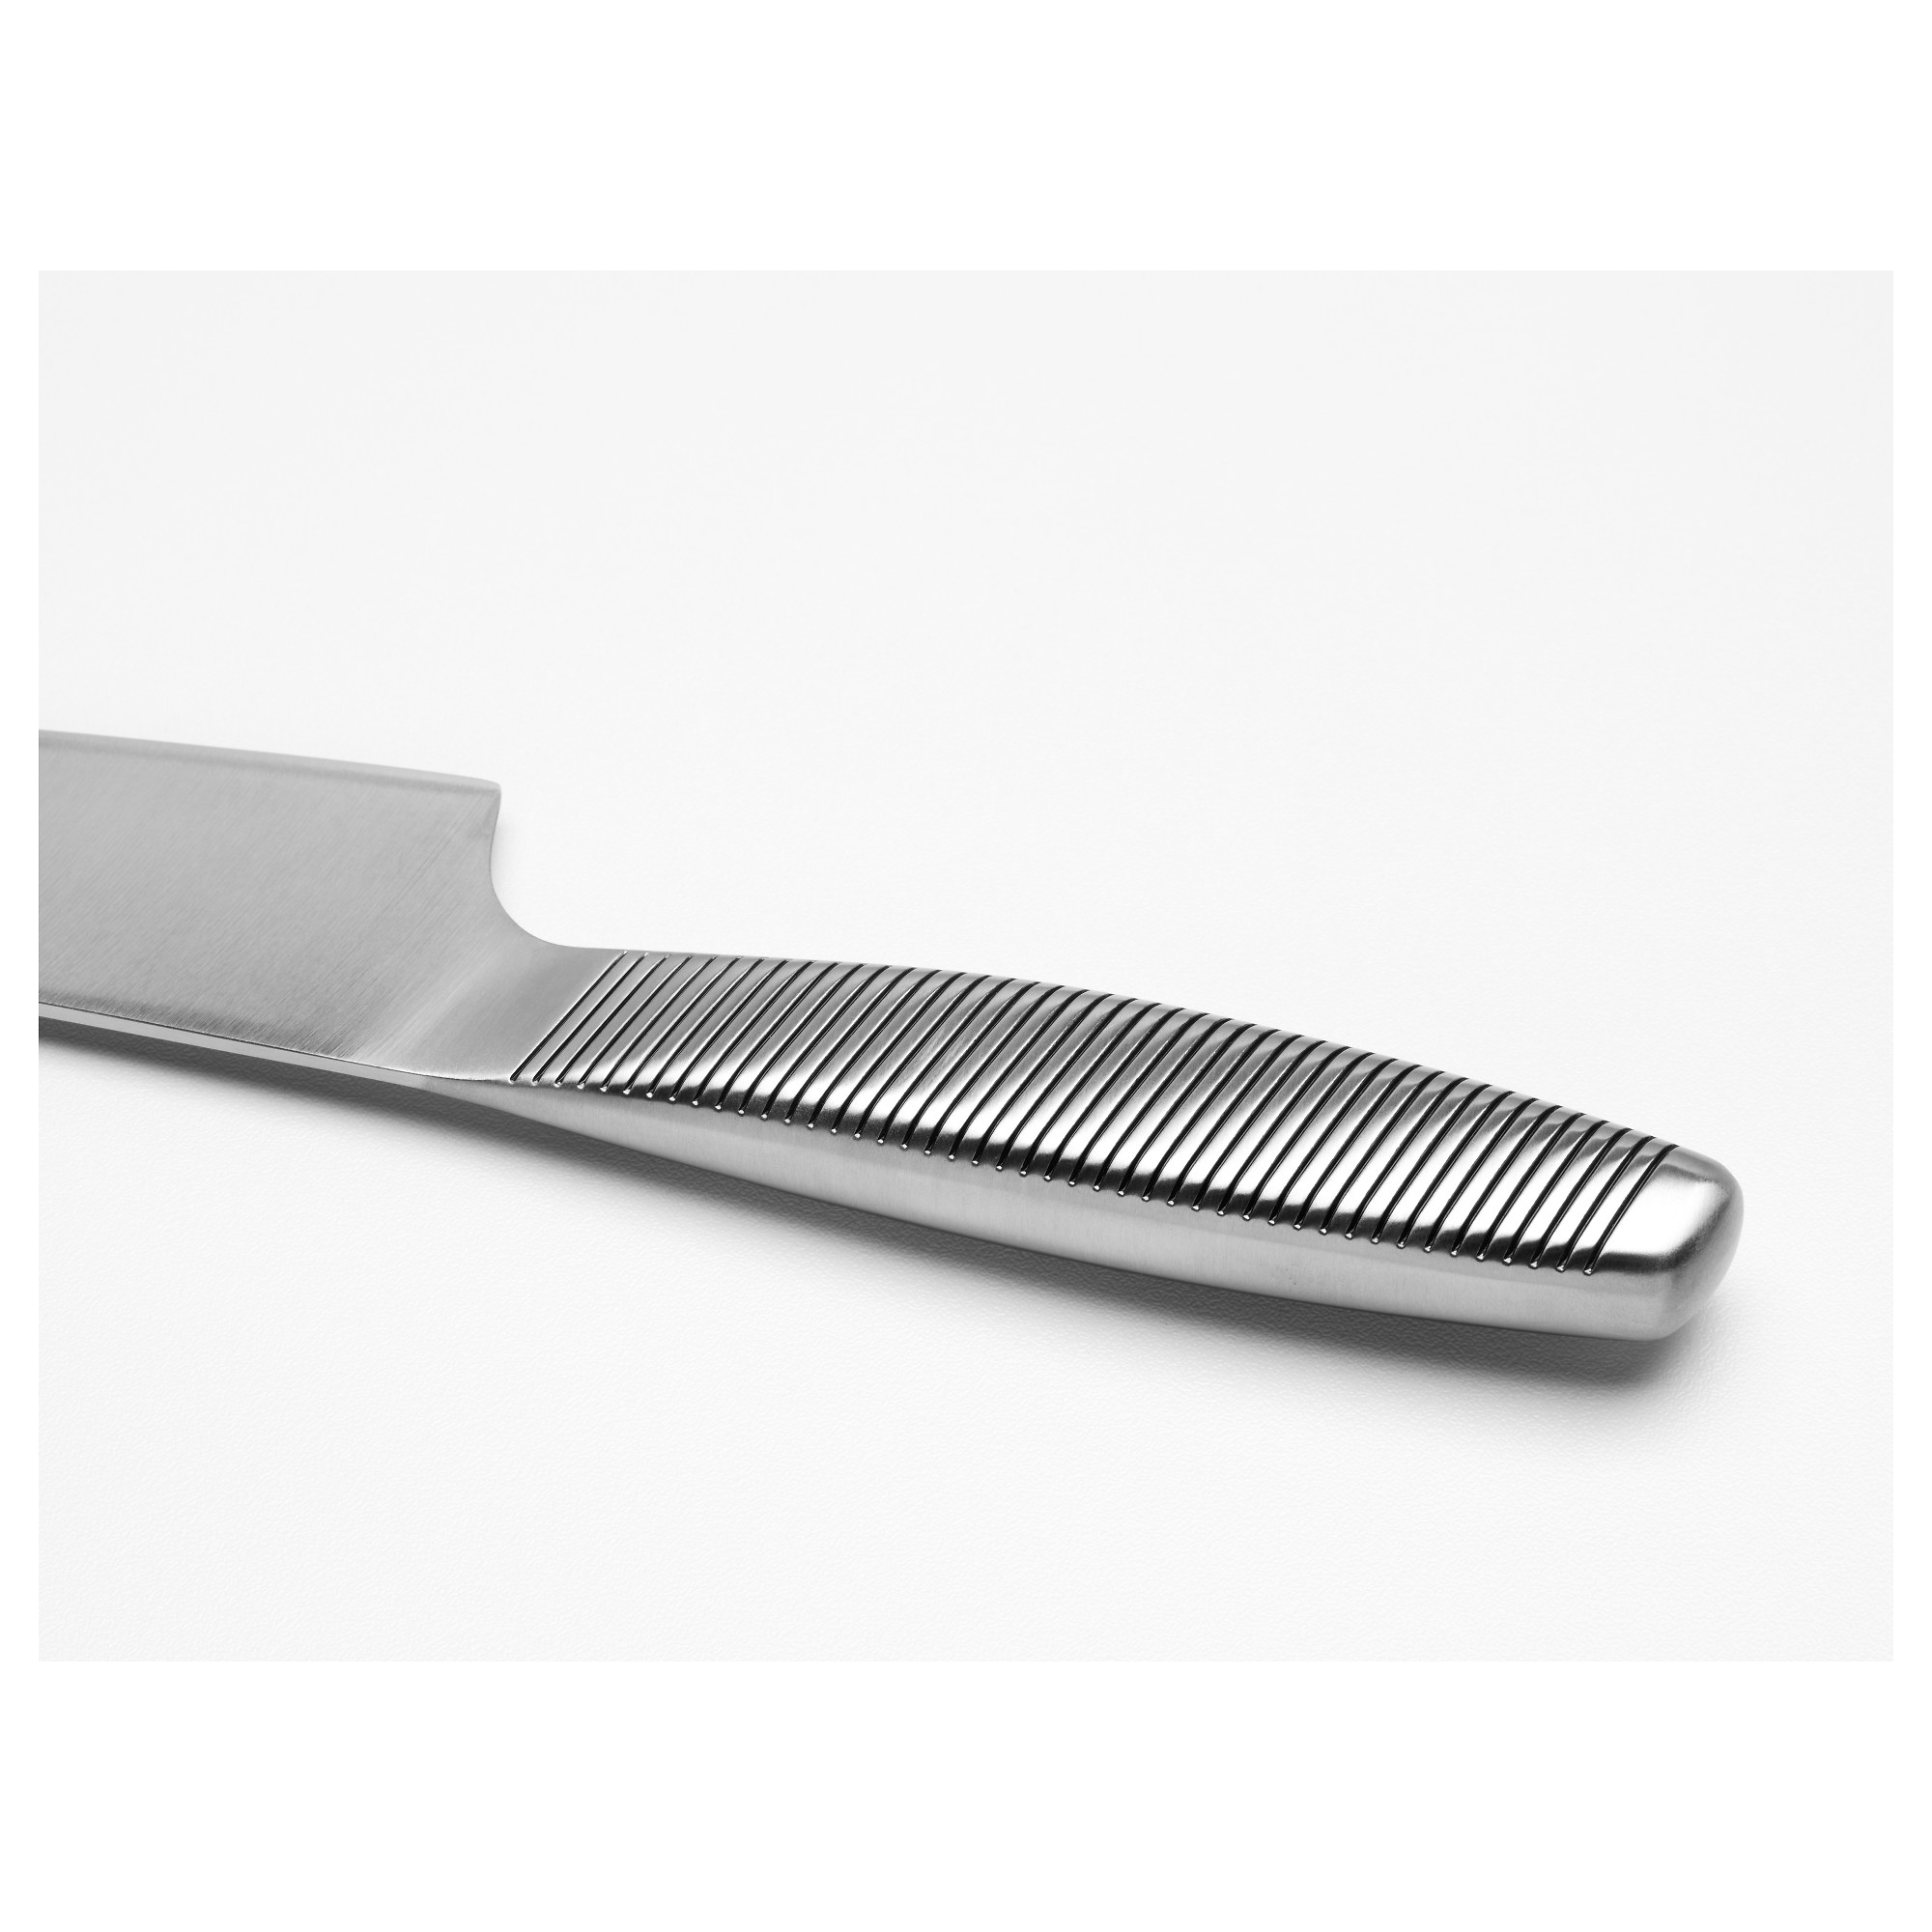 IKEA 365+ cook's knife